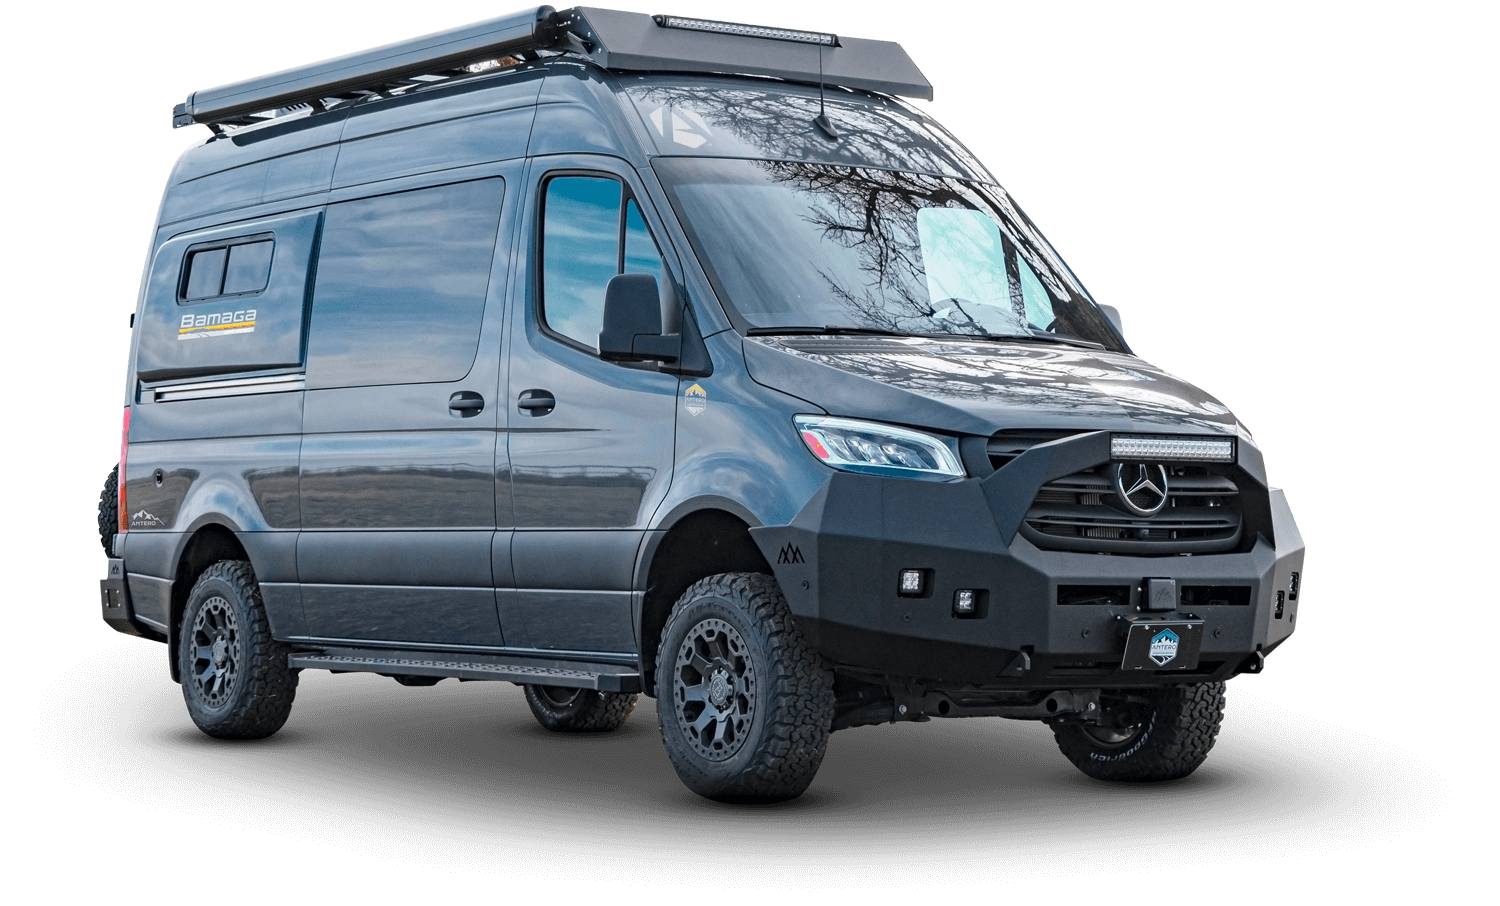 The Bamaga Antero Adventure Van